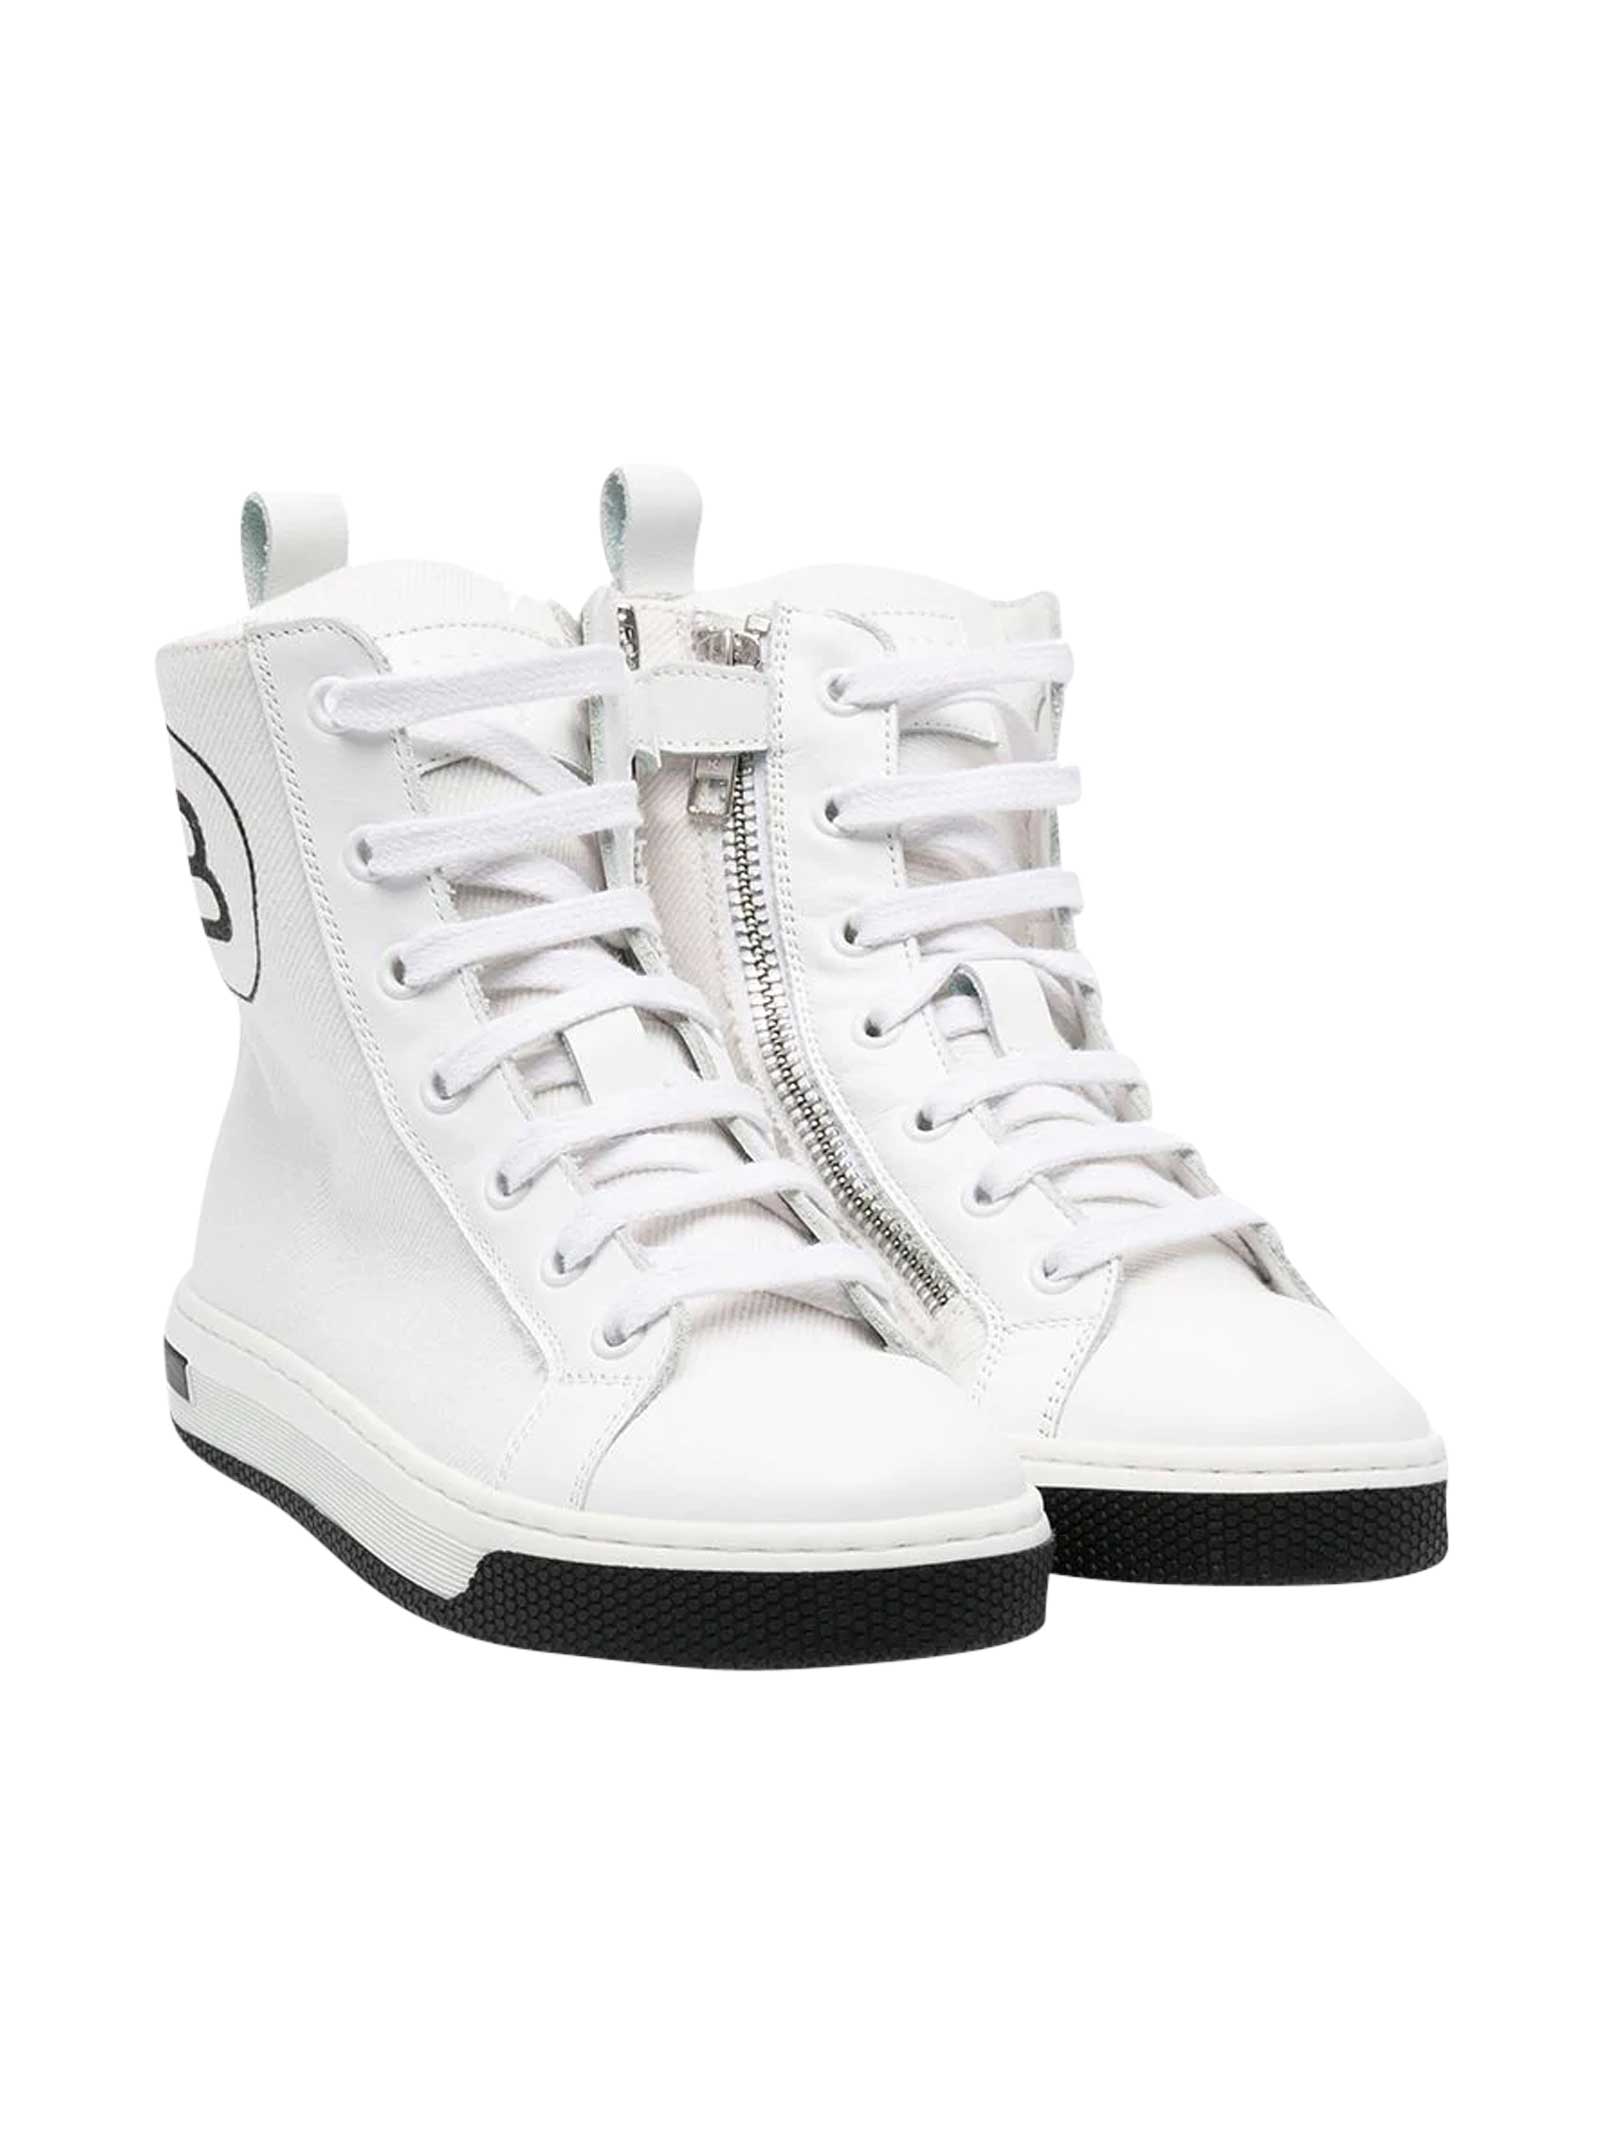 Balmain White Sneakers.